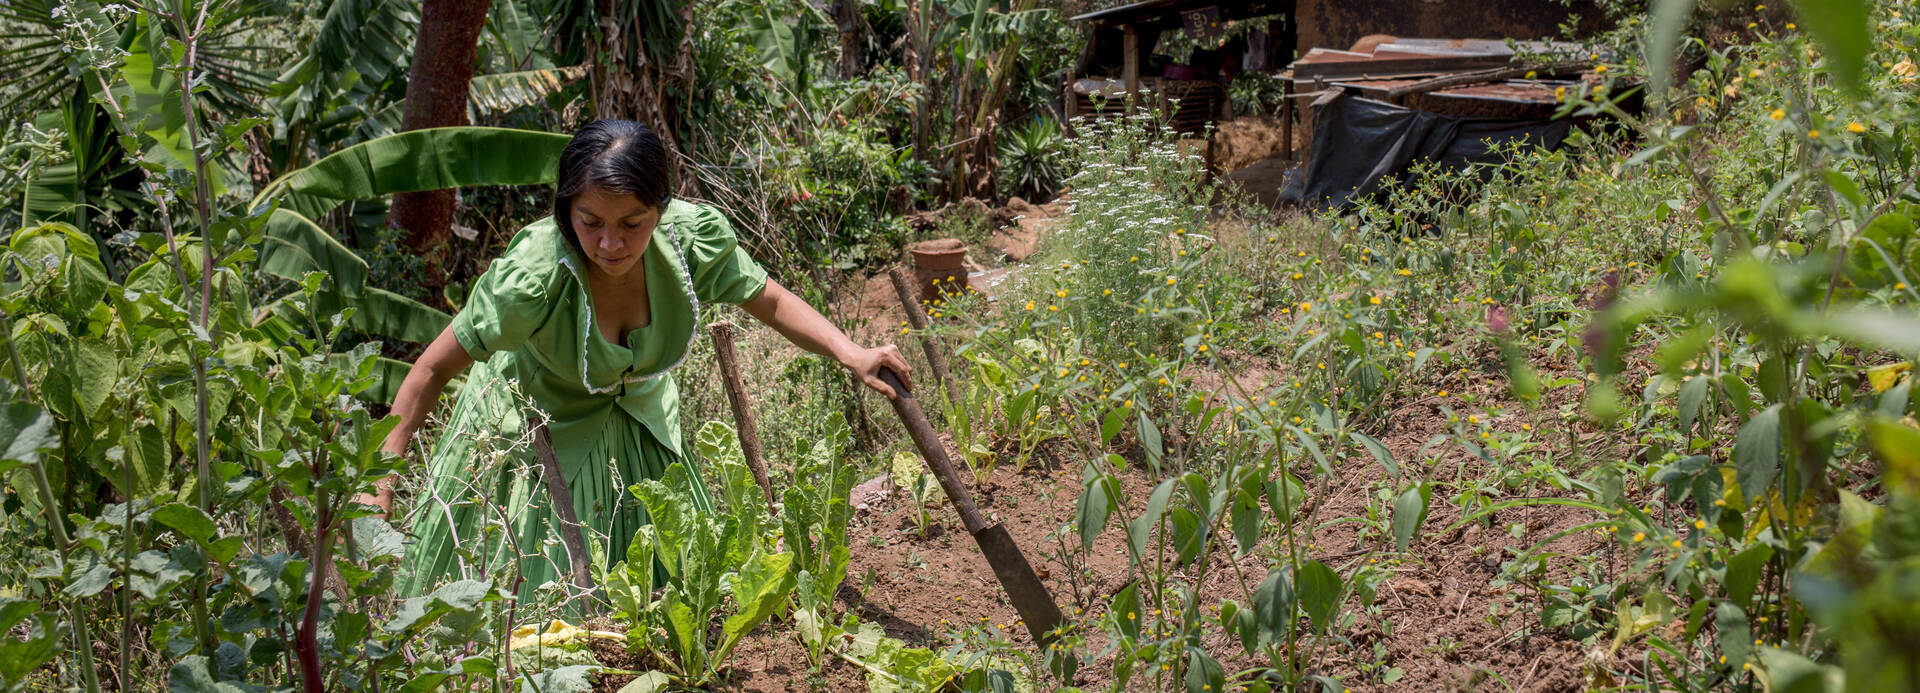 Frau bei der Feldarbeit in Guatemala